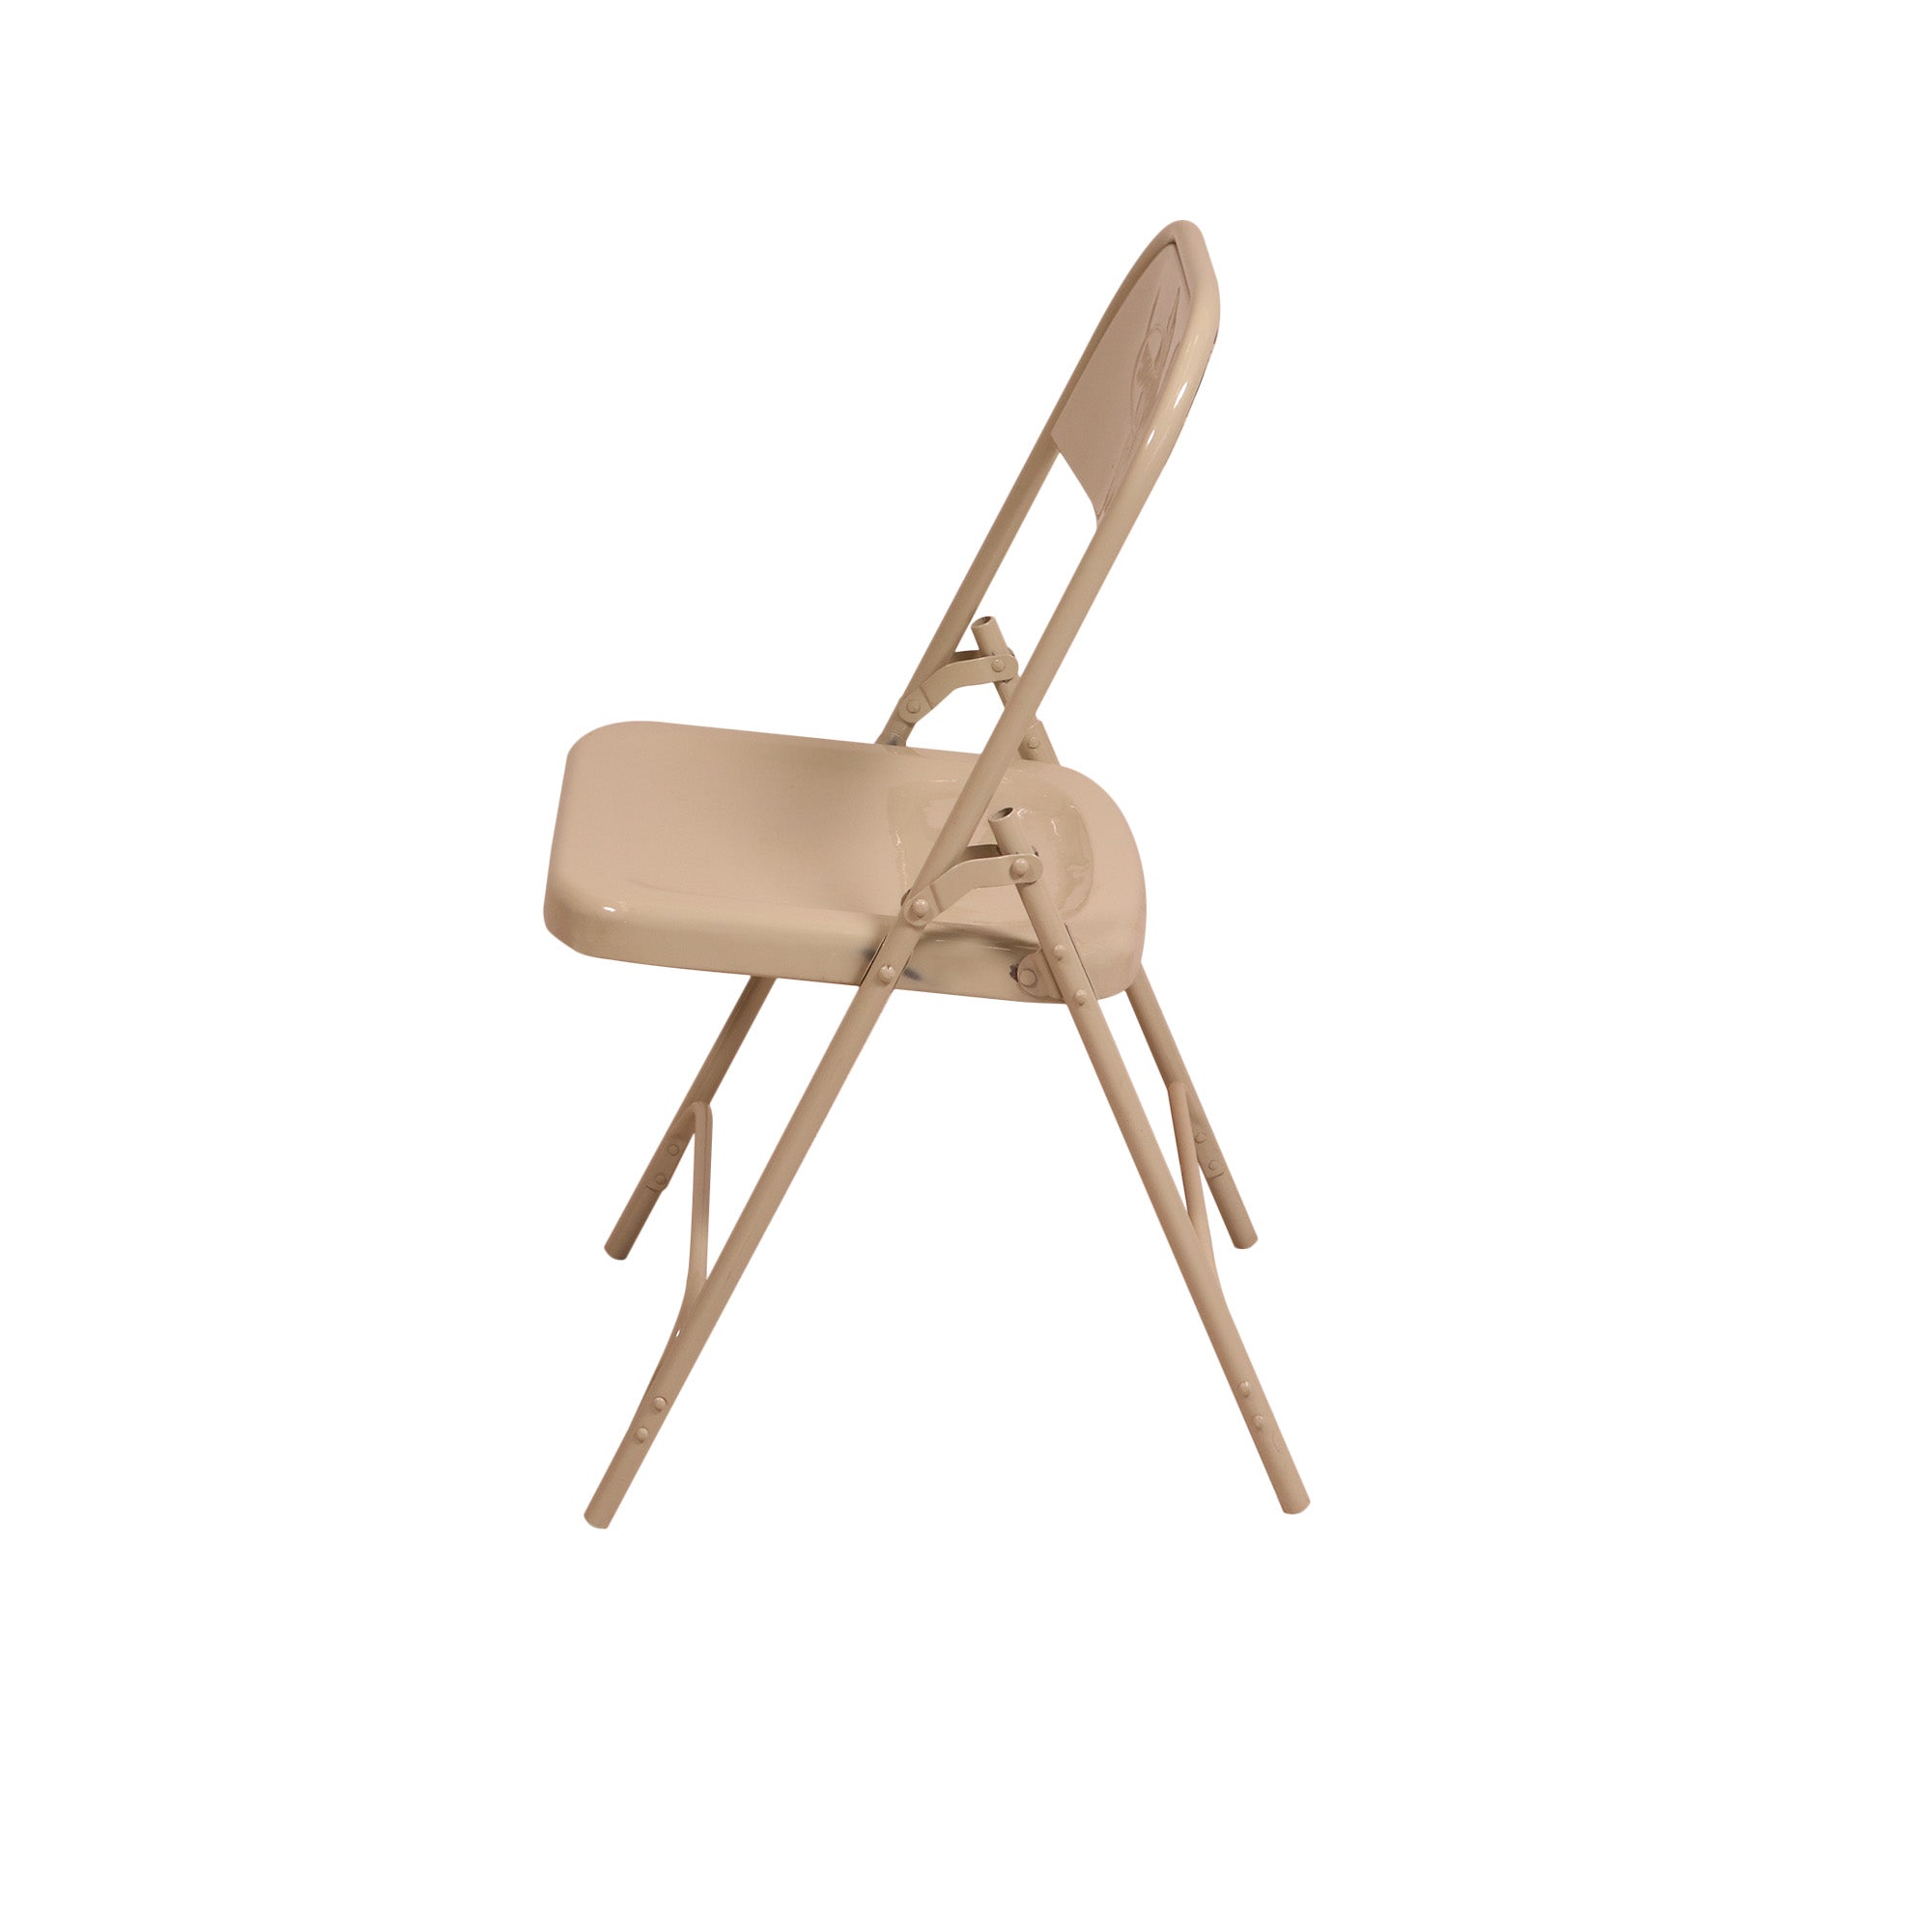 Pretty Metal Folding Chair Folding Chair